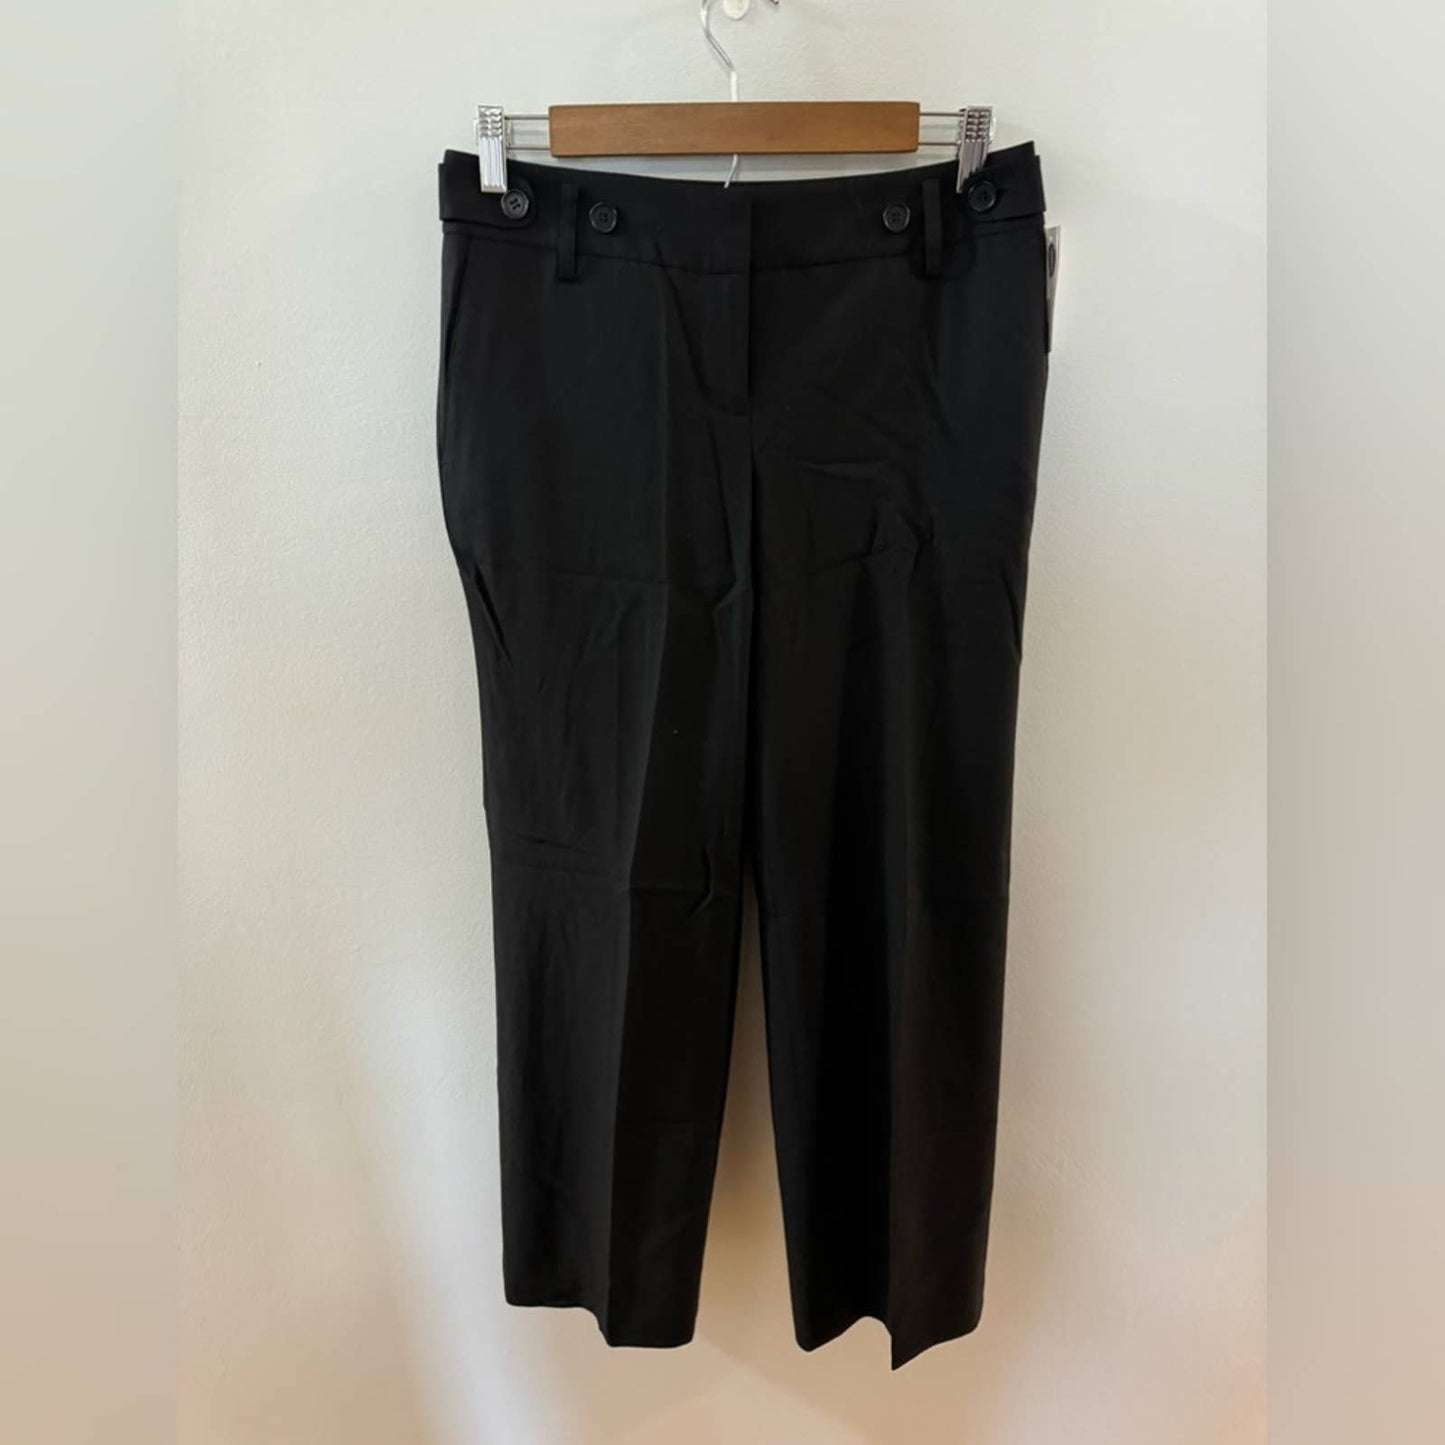 New without Tag Size 4P Ann Taylor Loft Black Dress Pants